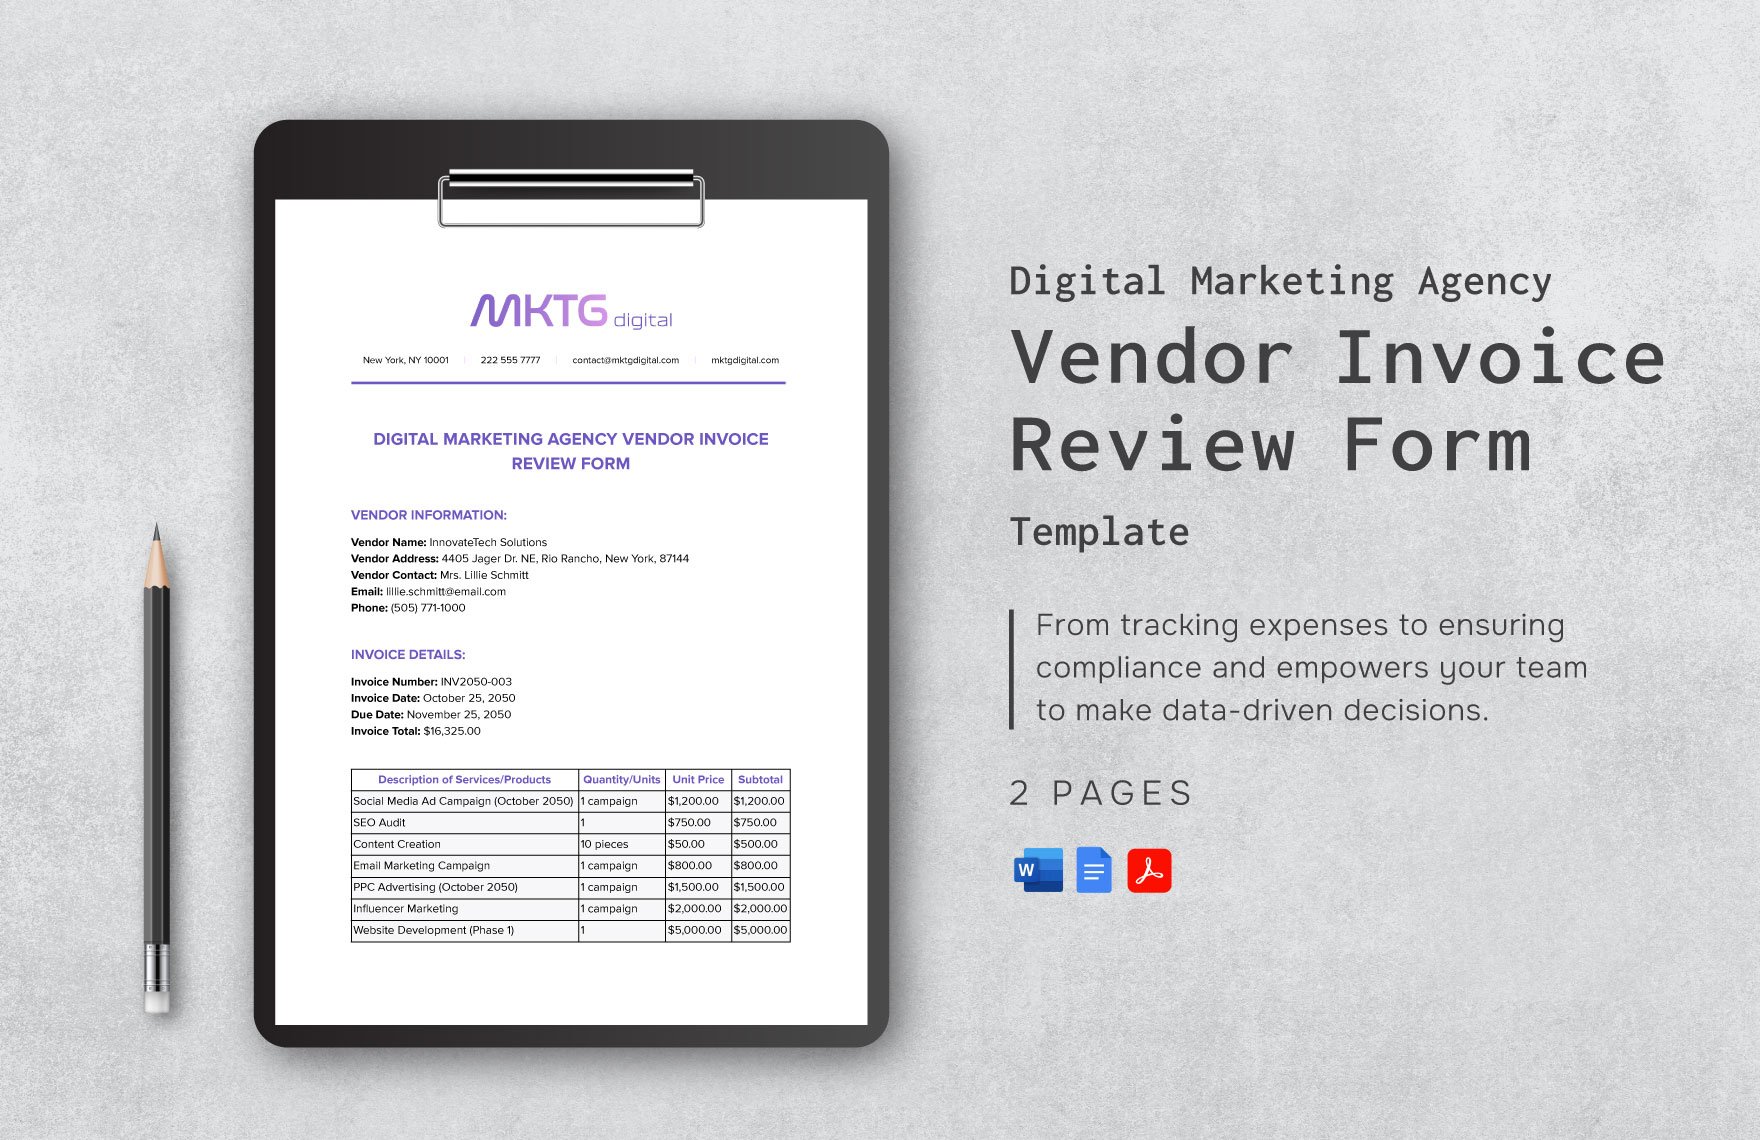 Digital Marketing Agency Vendor Invoice Review Form Template